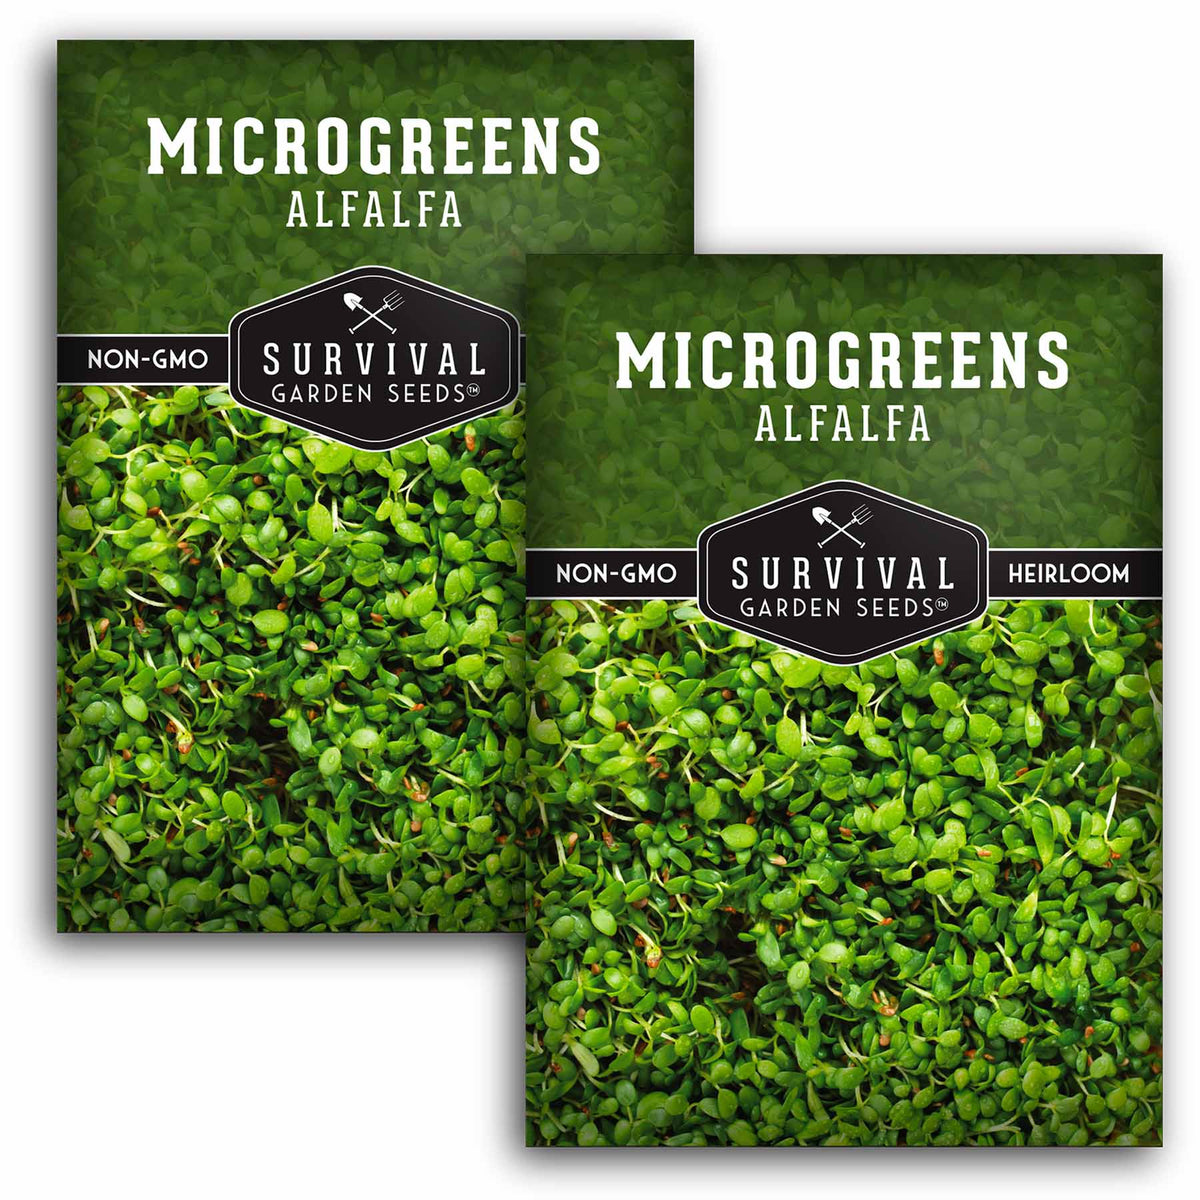 2 packets of Alfalfa Microgreens seeds